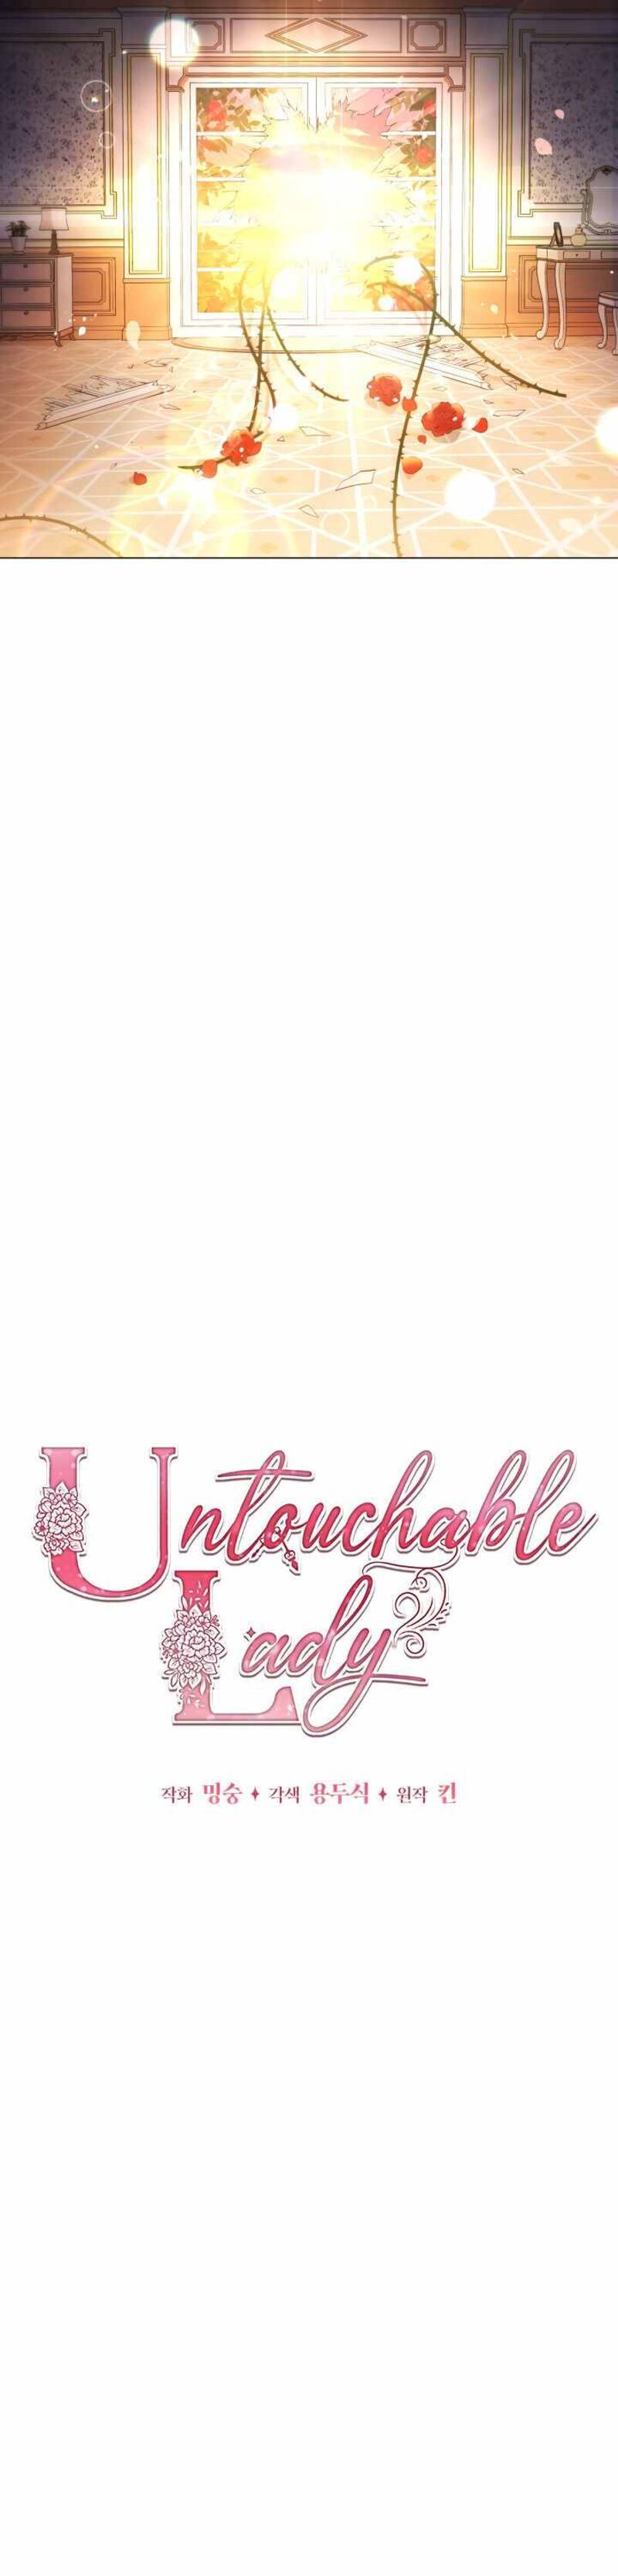 Untouchable Lady 10 7